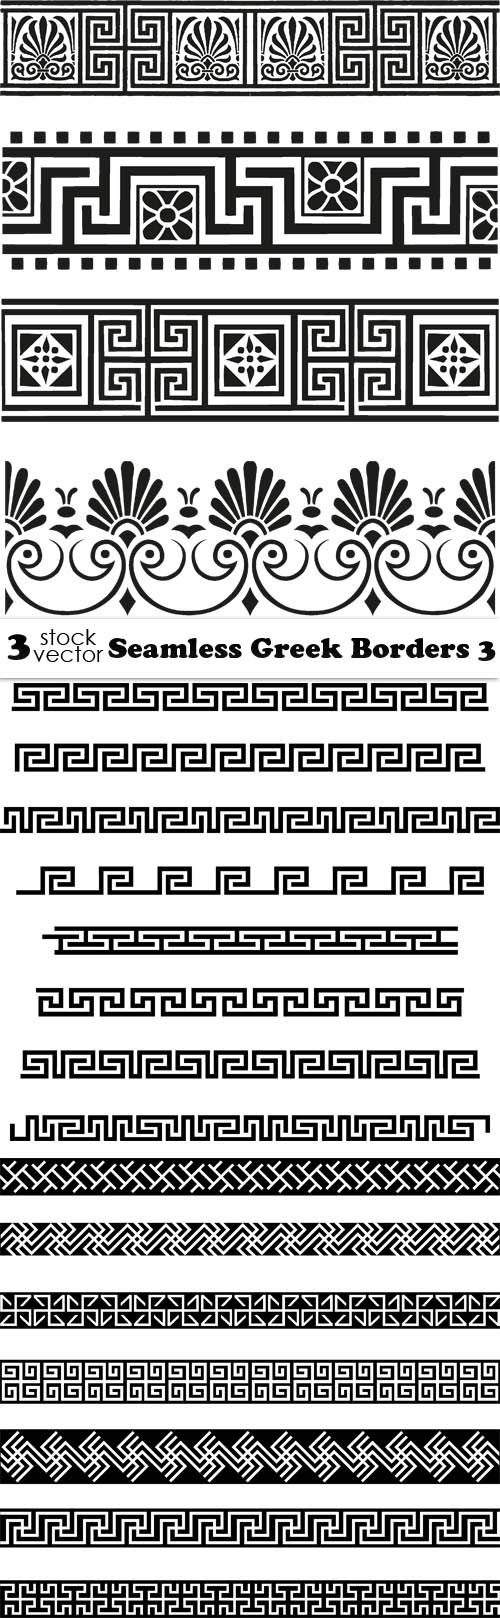 Vectors - Seamless Greek Borders 3